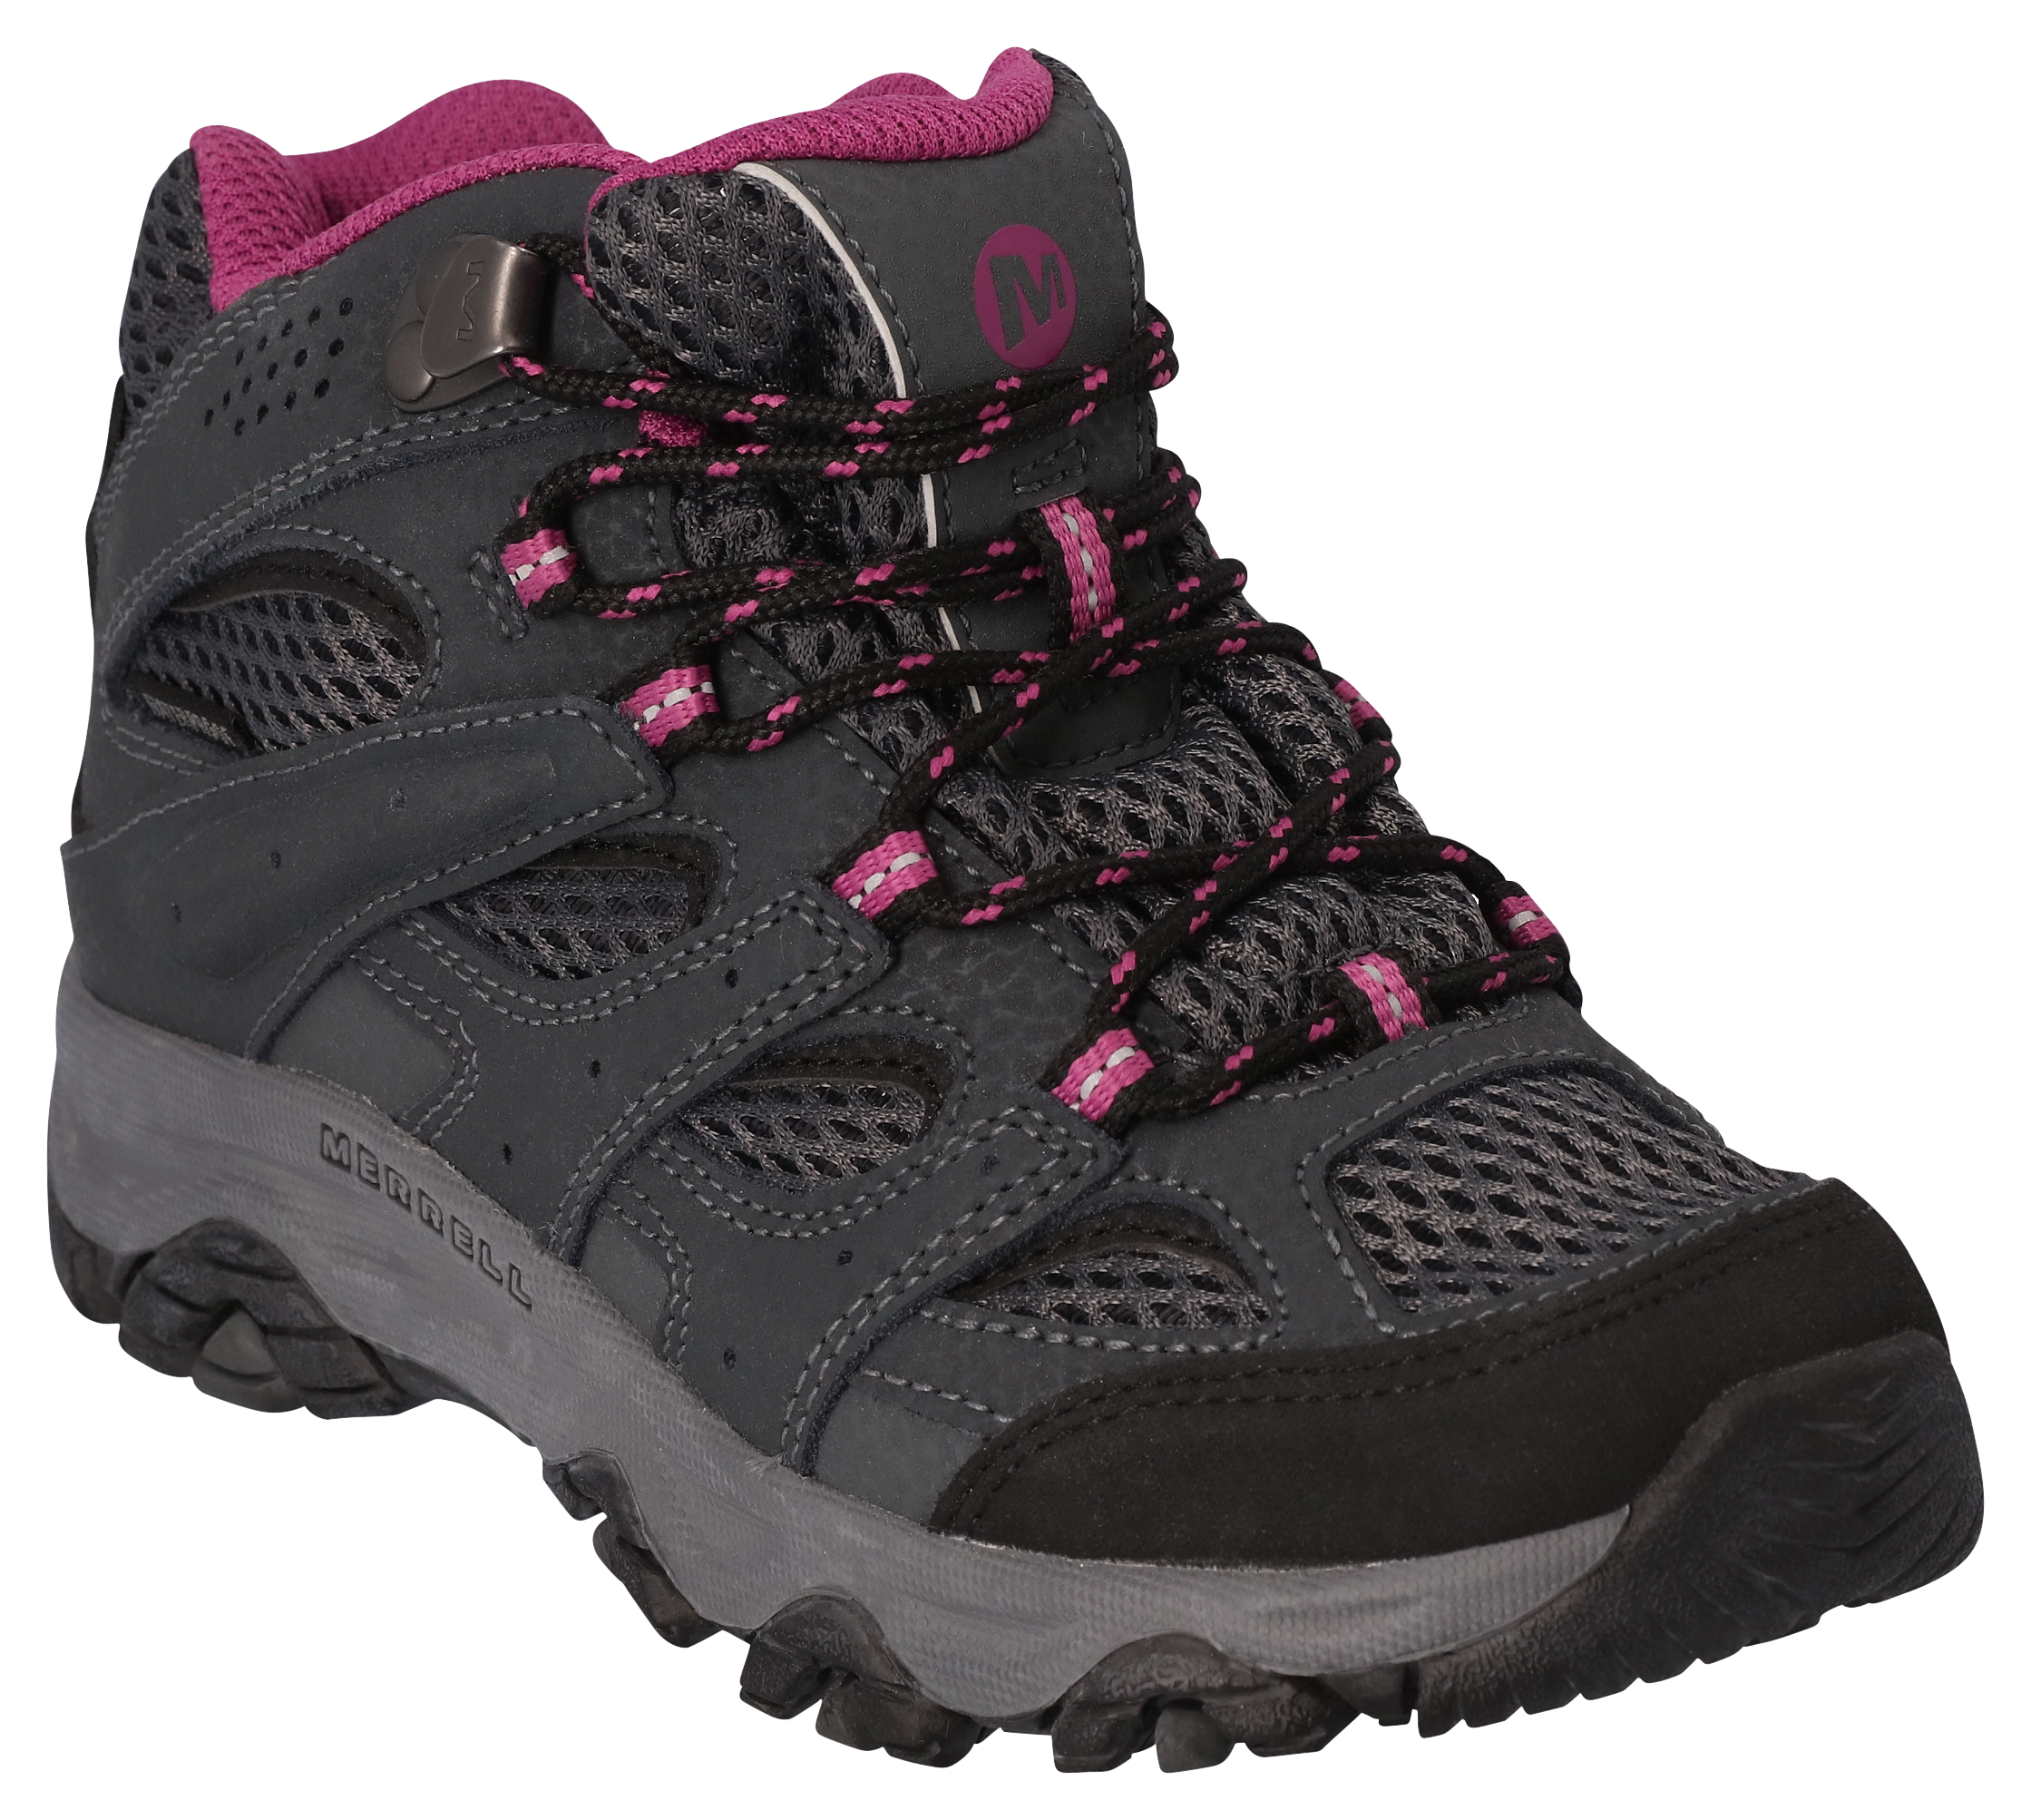 Merrell Moab III Mid Waterproof Hiking Boots for Kids - Granite - 3 Kids